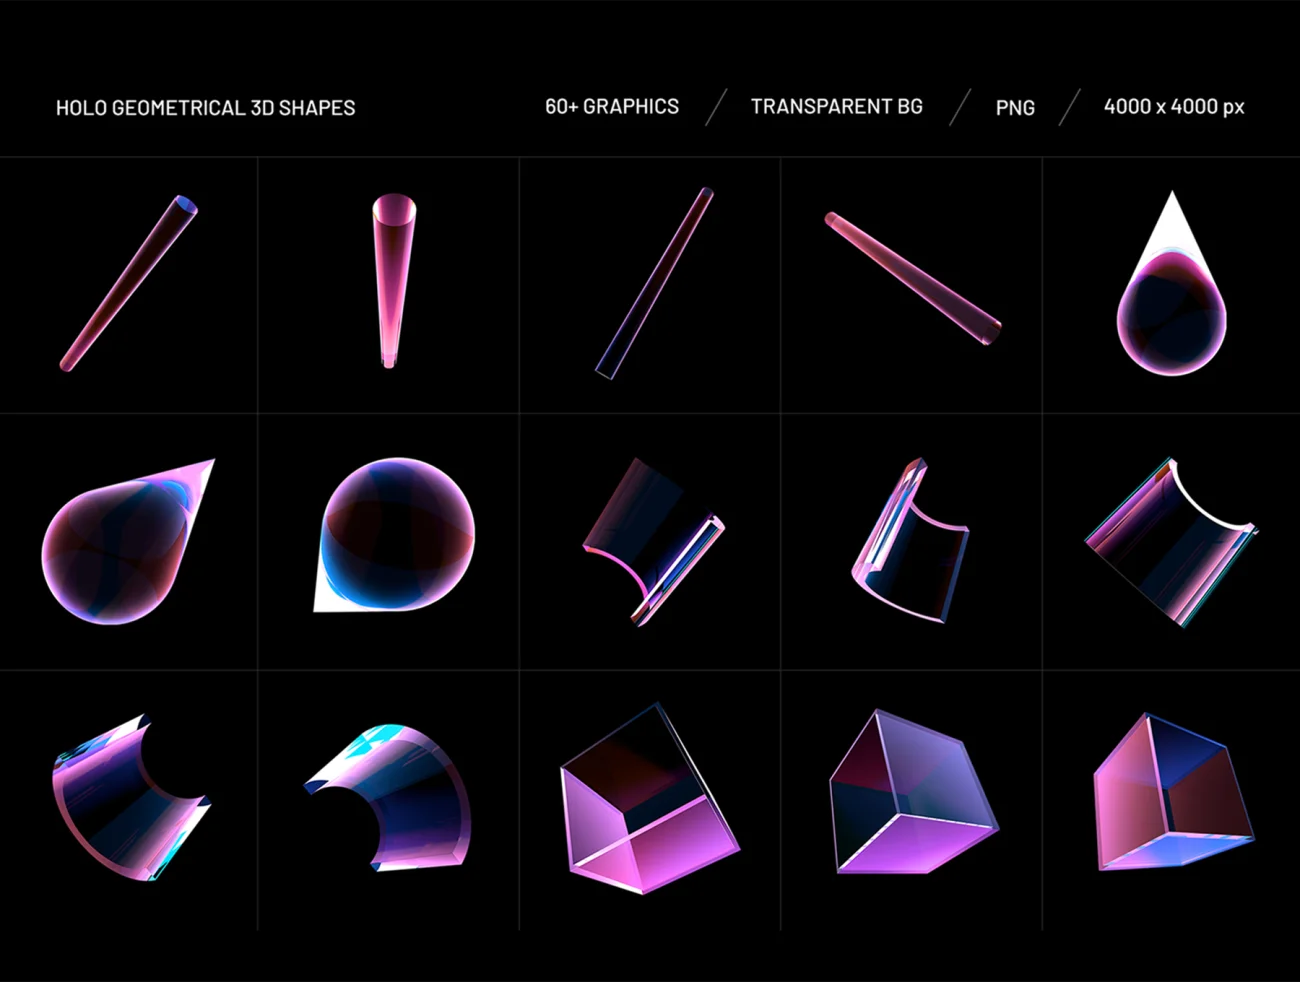 60款全息几何3D形状模型素材 Holo Geometrical 3D Shapes Collection .sketch .psd .ai .ae .id .ppt .xd .figma .an插图3